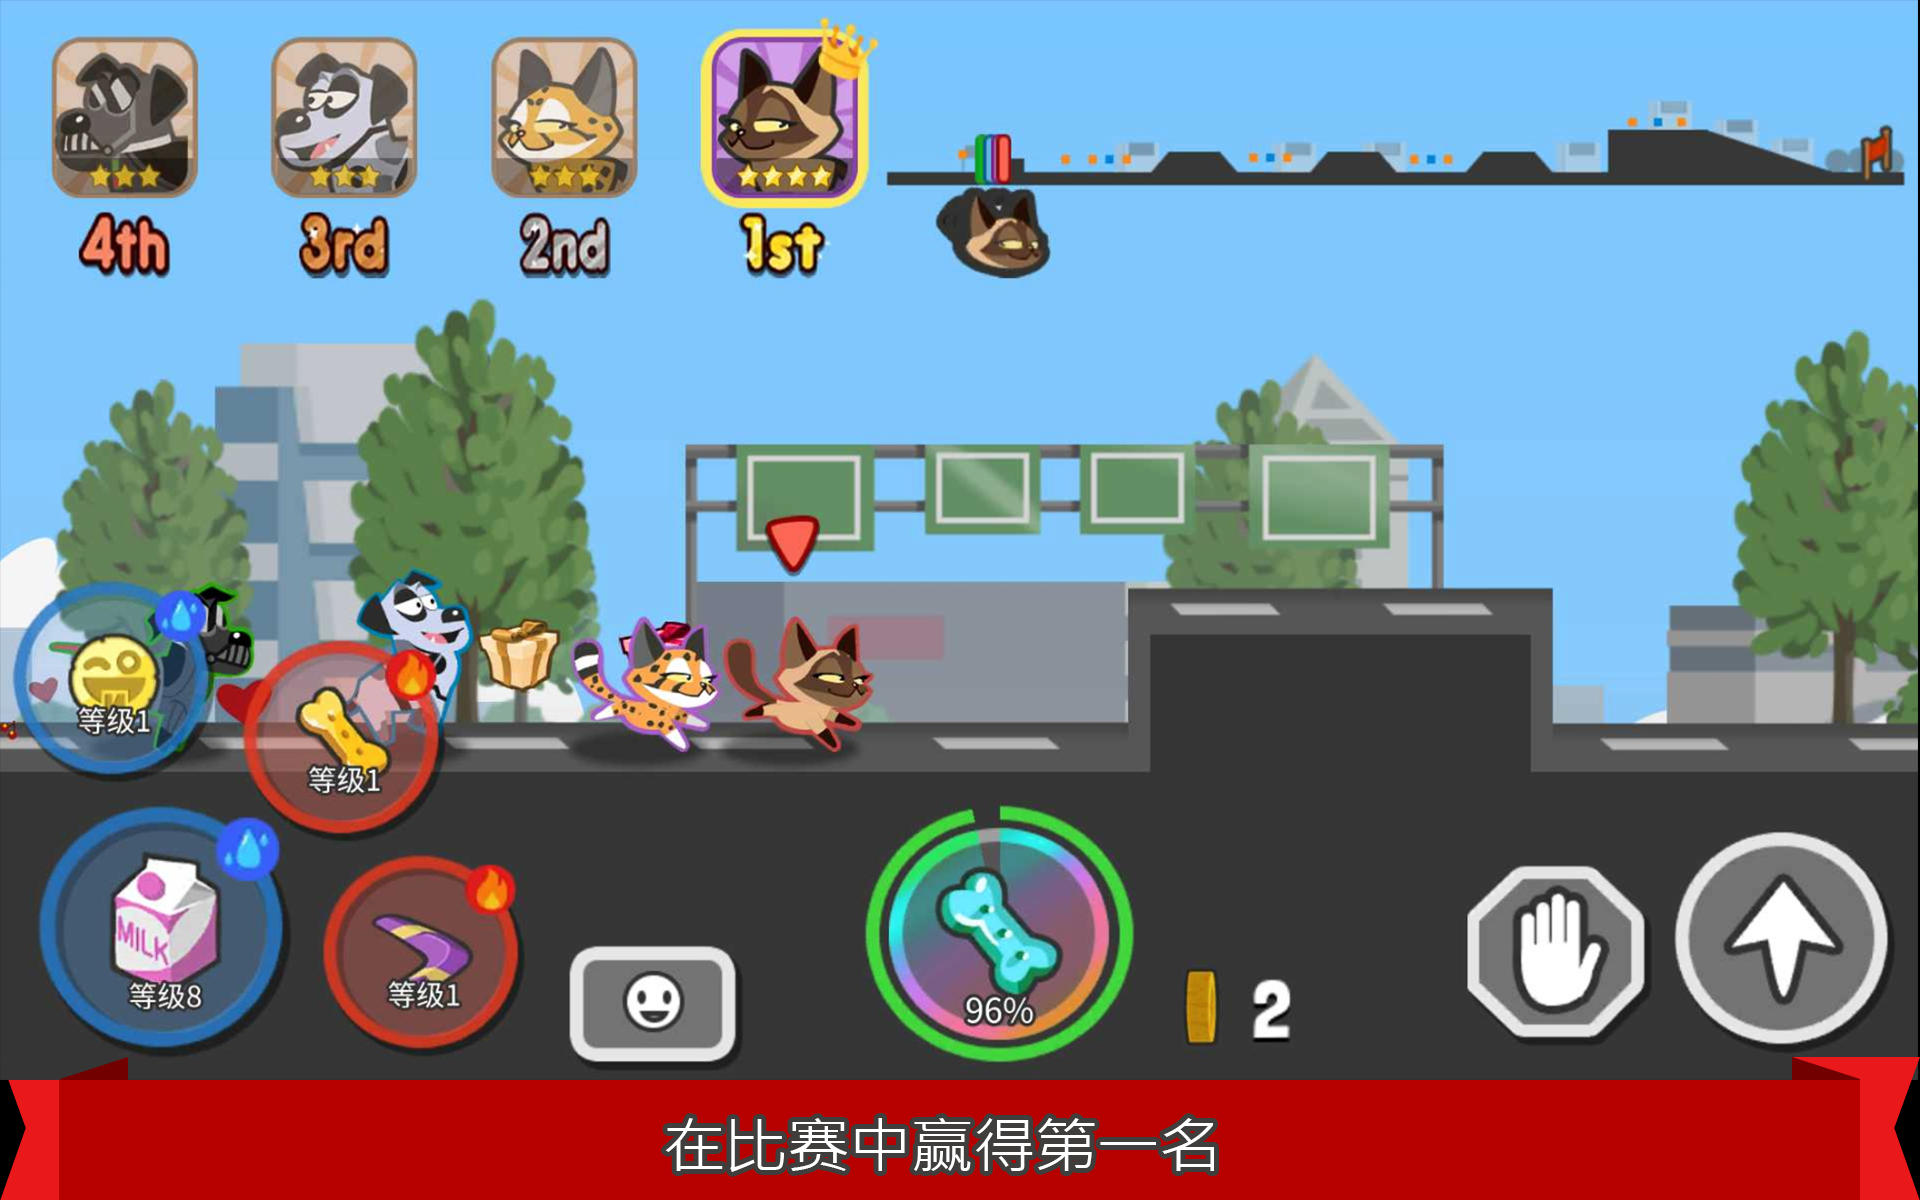 Screenshot 1 of Pets Race - 재미있는 멀티플레이어 PvP 온라인 레이싱 게임 1.2.9